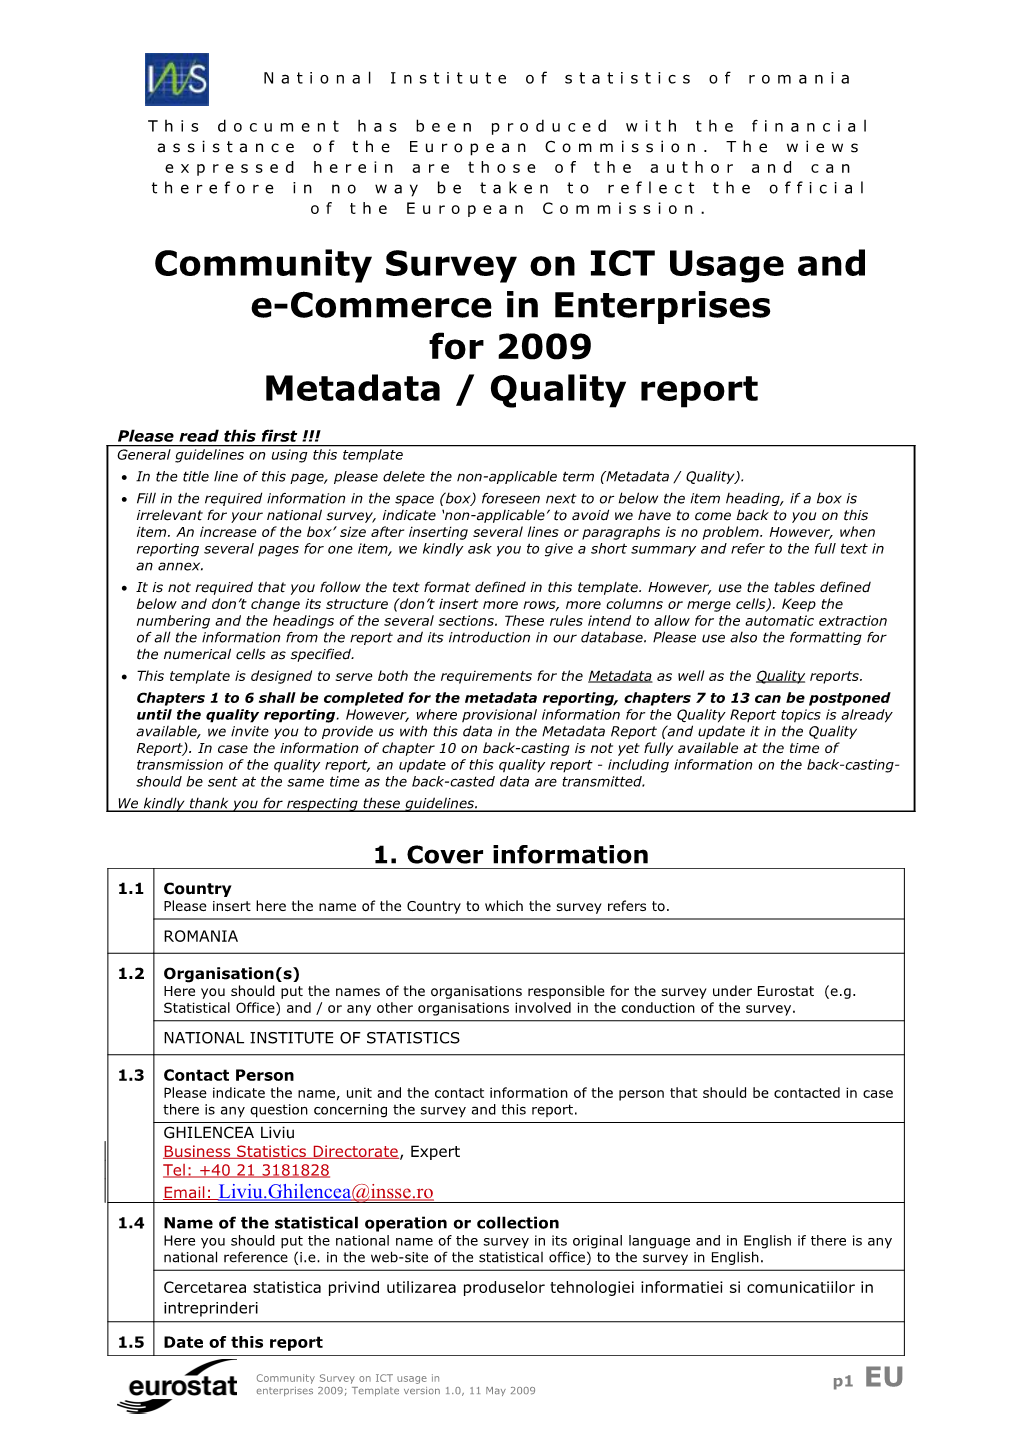 Community Survey on ICT Usage and E-Commerce in Enterprises - 2006